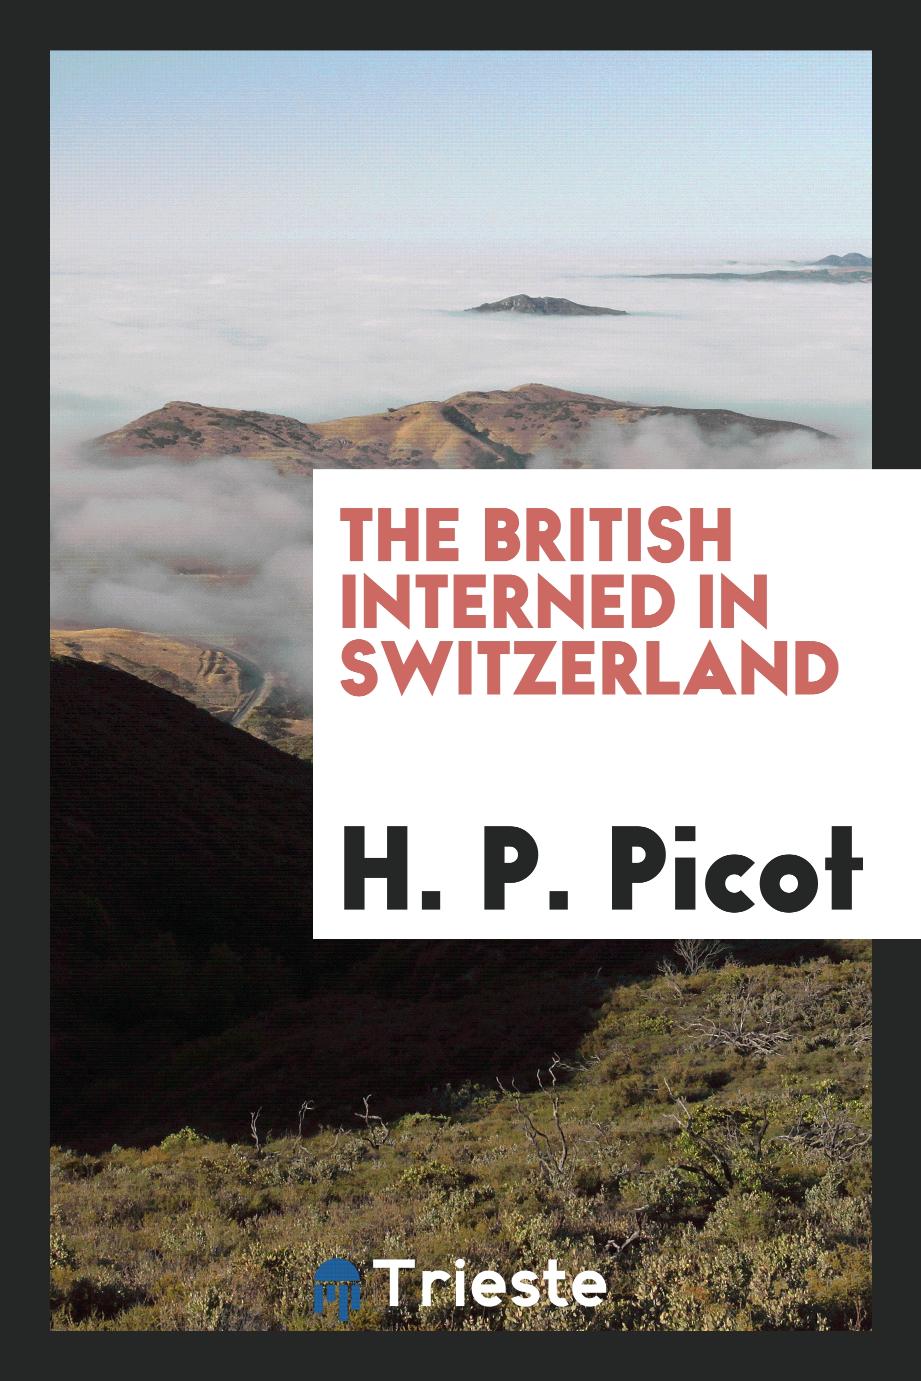 The British interned in Switzerland